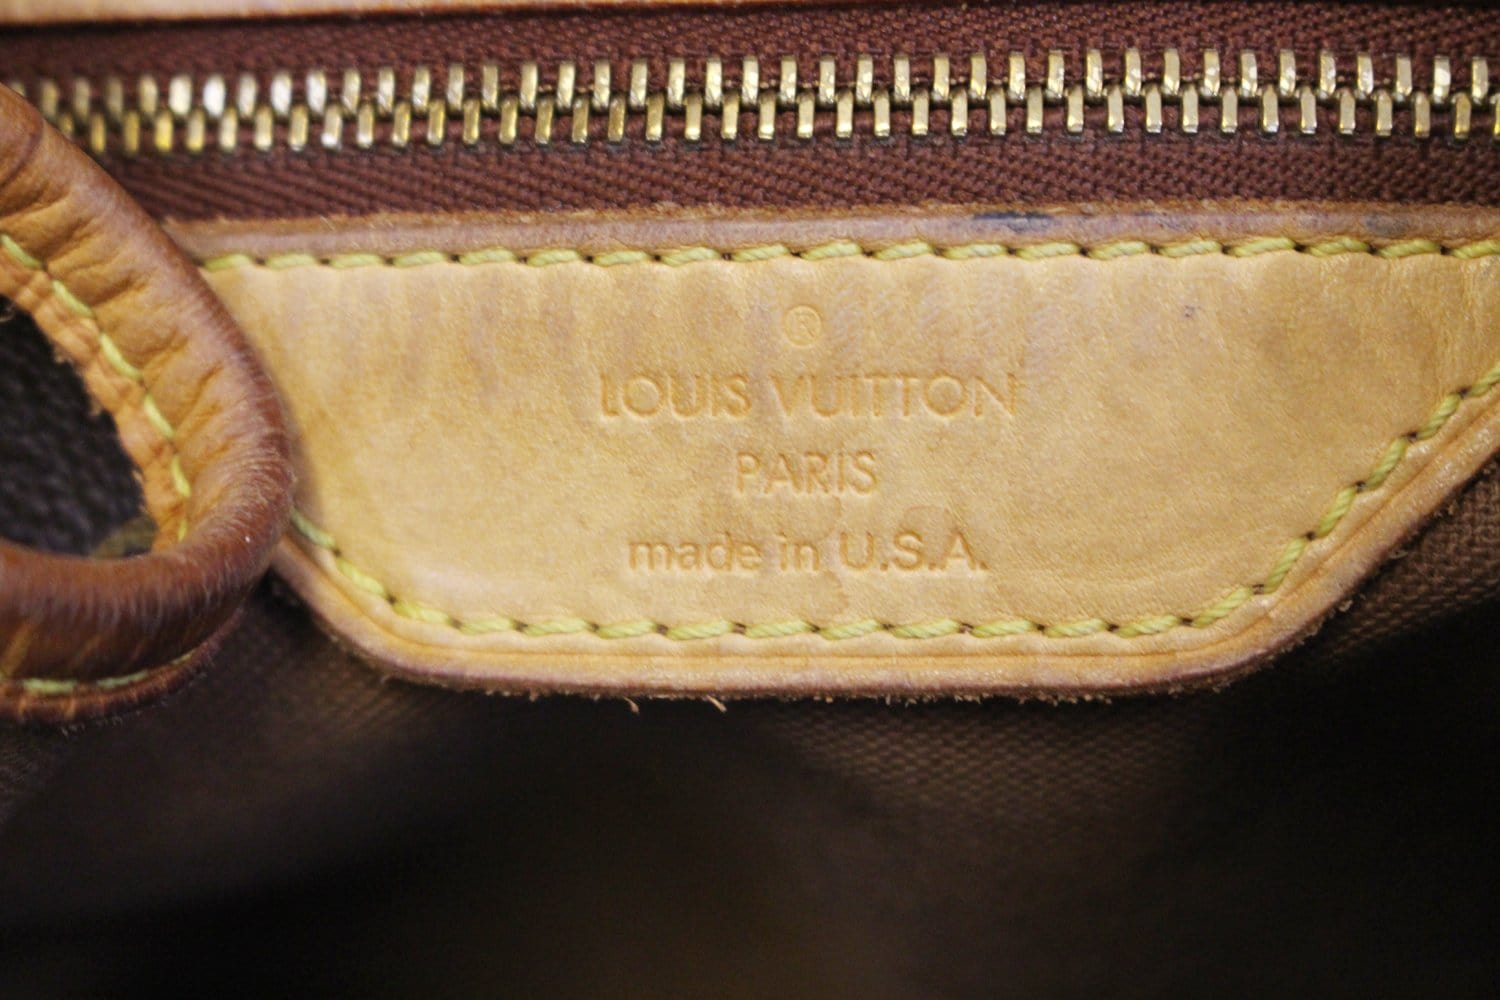 Preloved Louis Vuitton Monogram Batignolles Vertical Tote VI1006